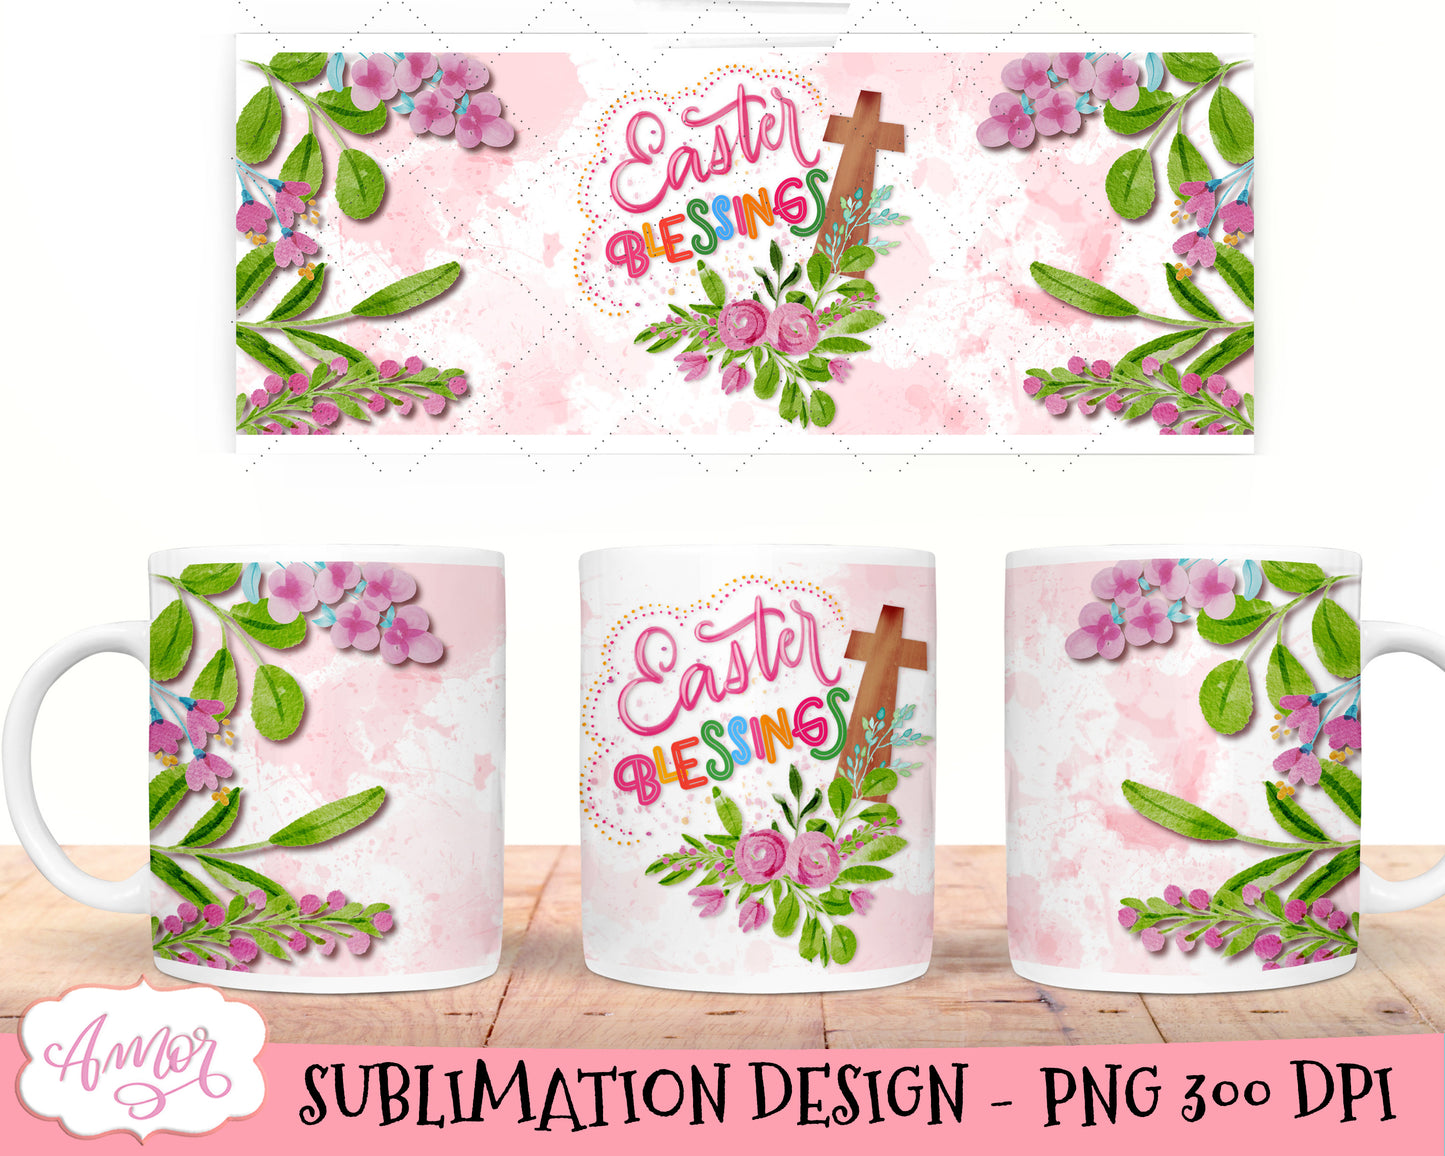 Easter blessings mug design for sublimation